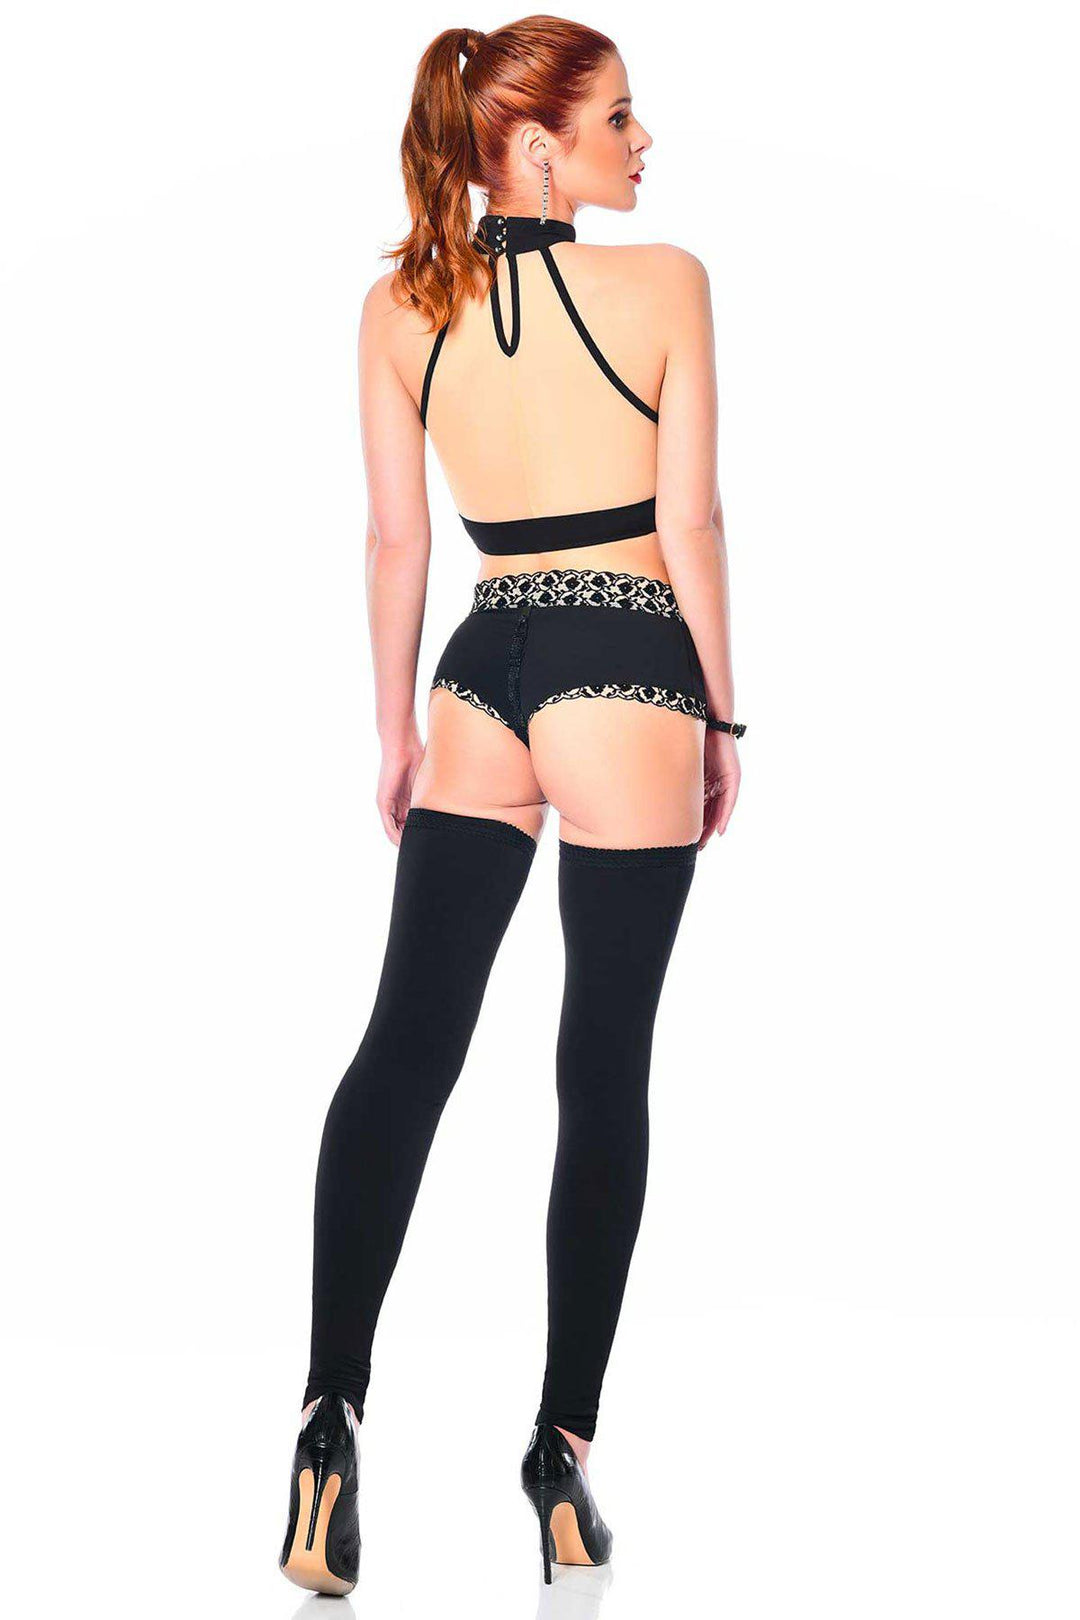 Liberty Shorts and Stocking Set-Fetish Sets-Les P'Tites Folies-SEXYSHOES.COM